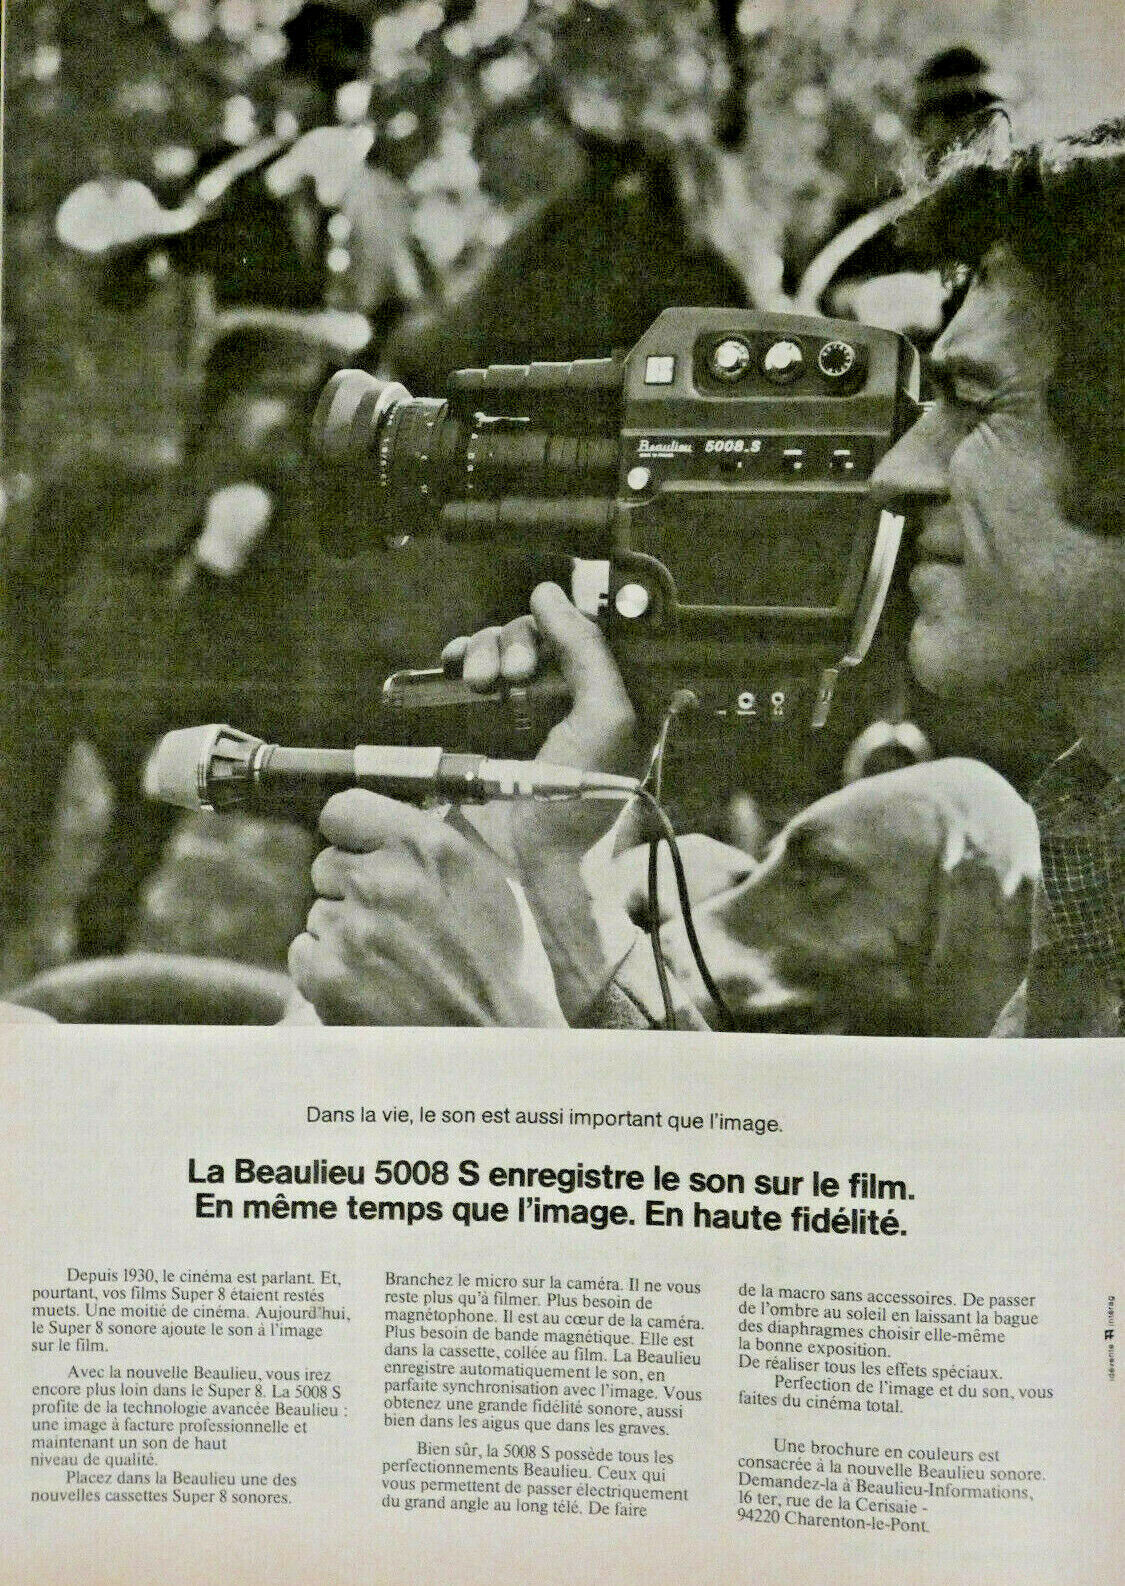 1975 PRESS ADVERTISEMENT BEAULIEU CAMERA 5008 S RECORDS SOUND ON FILM